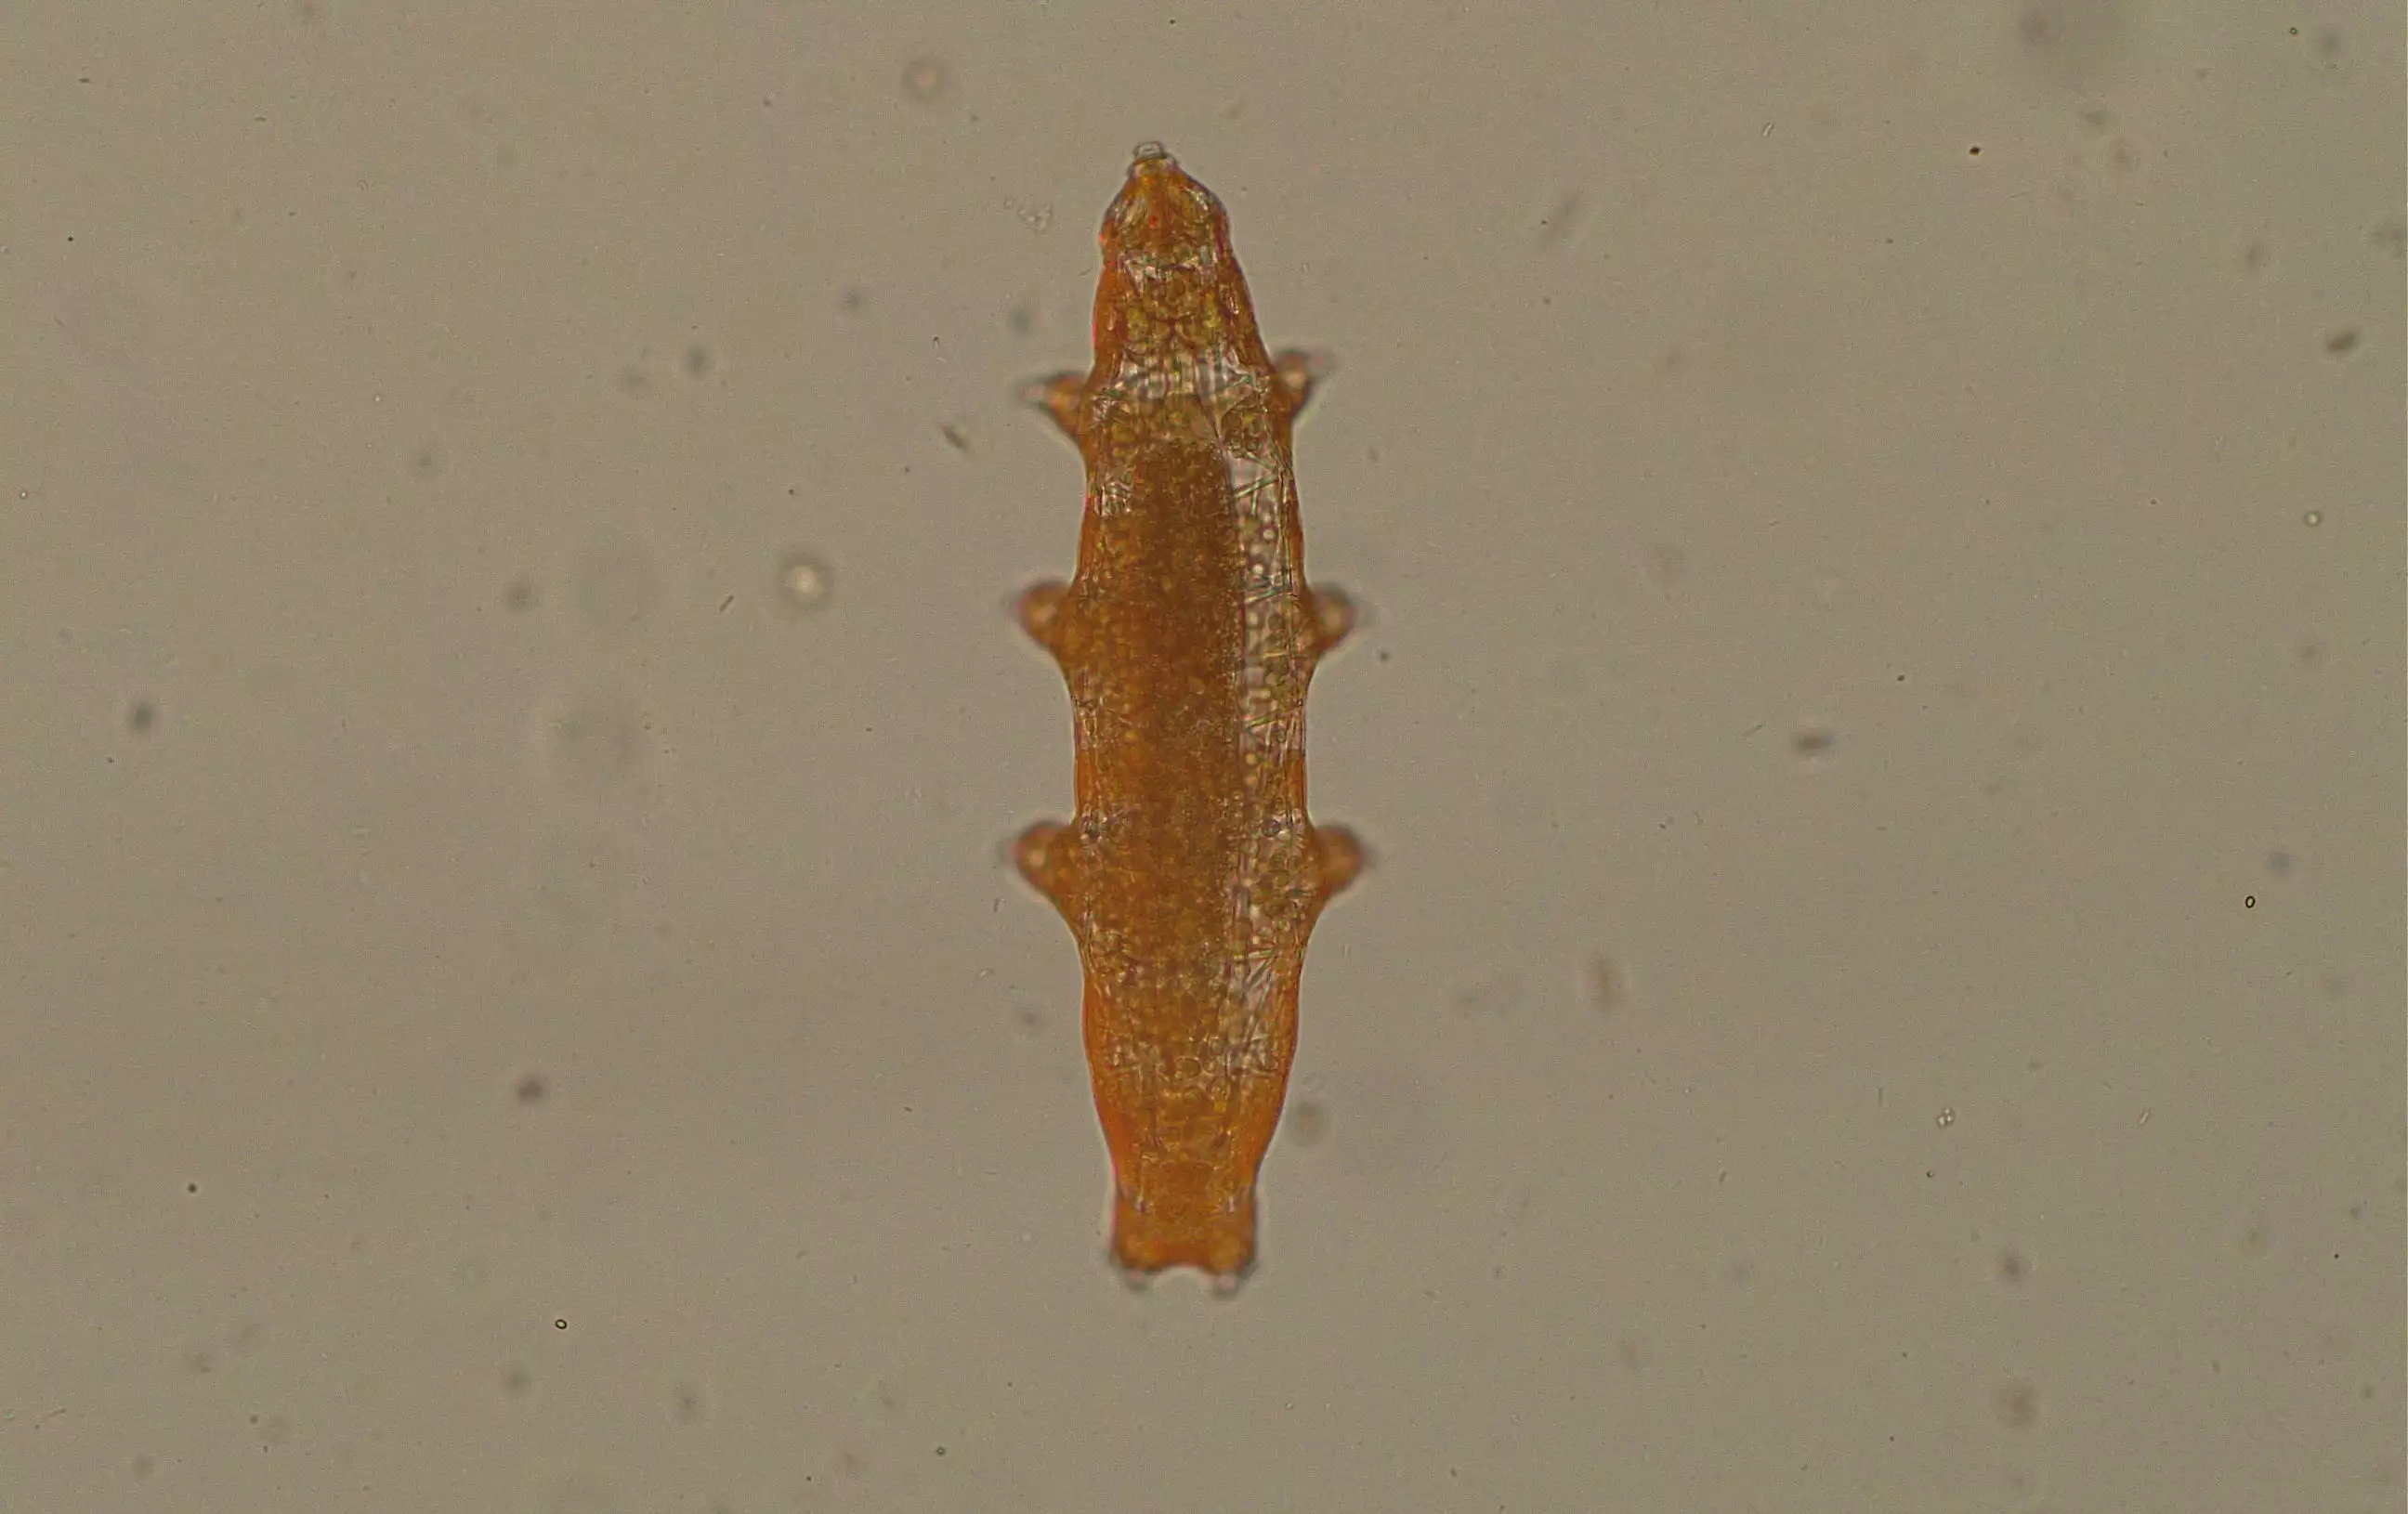 tardigrade magnified 40x under microscope